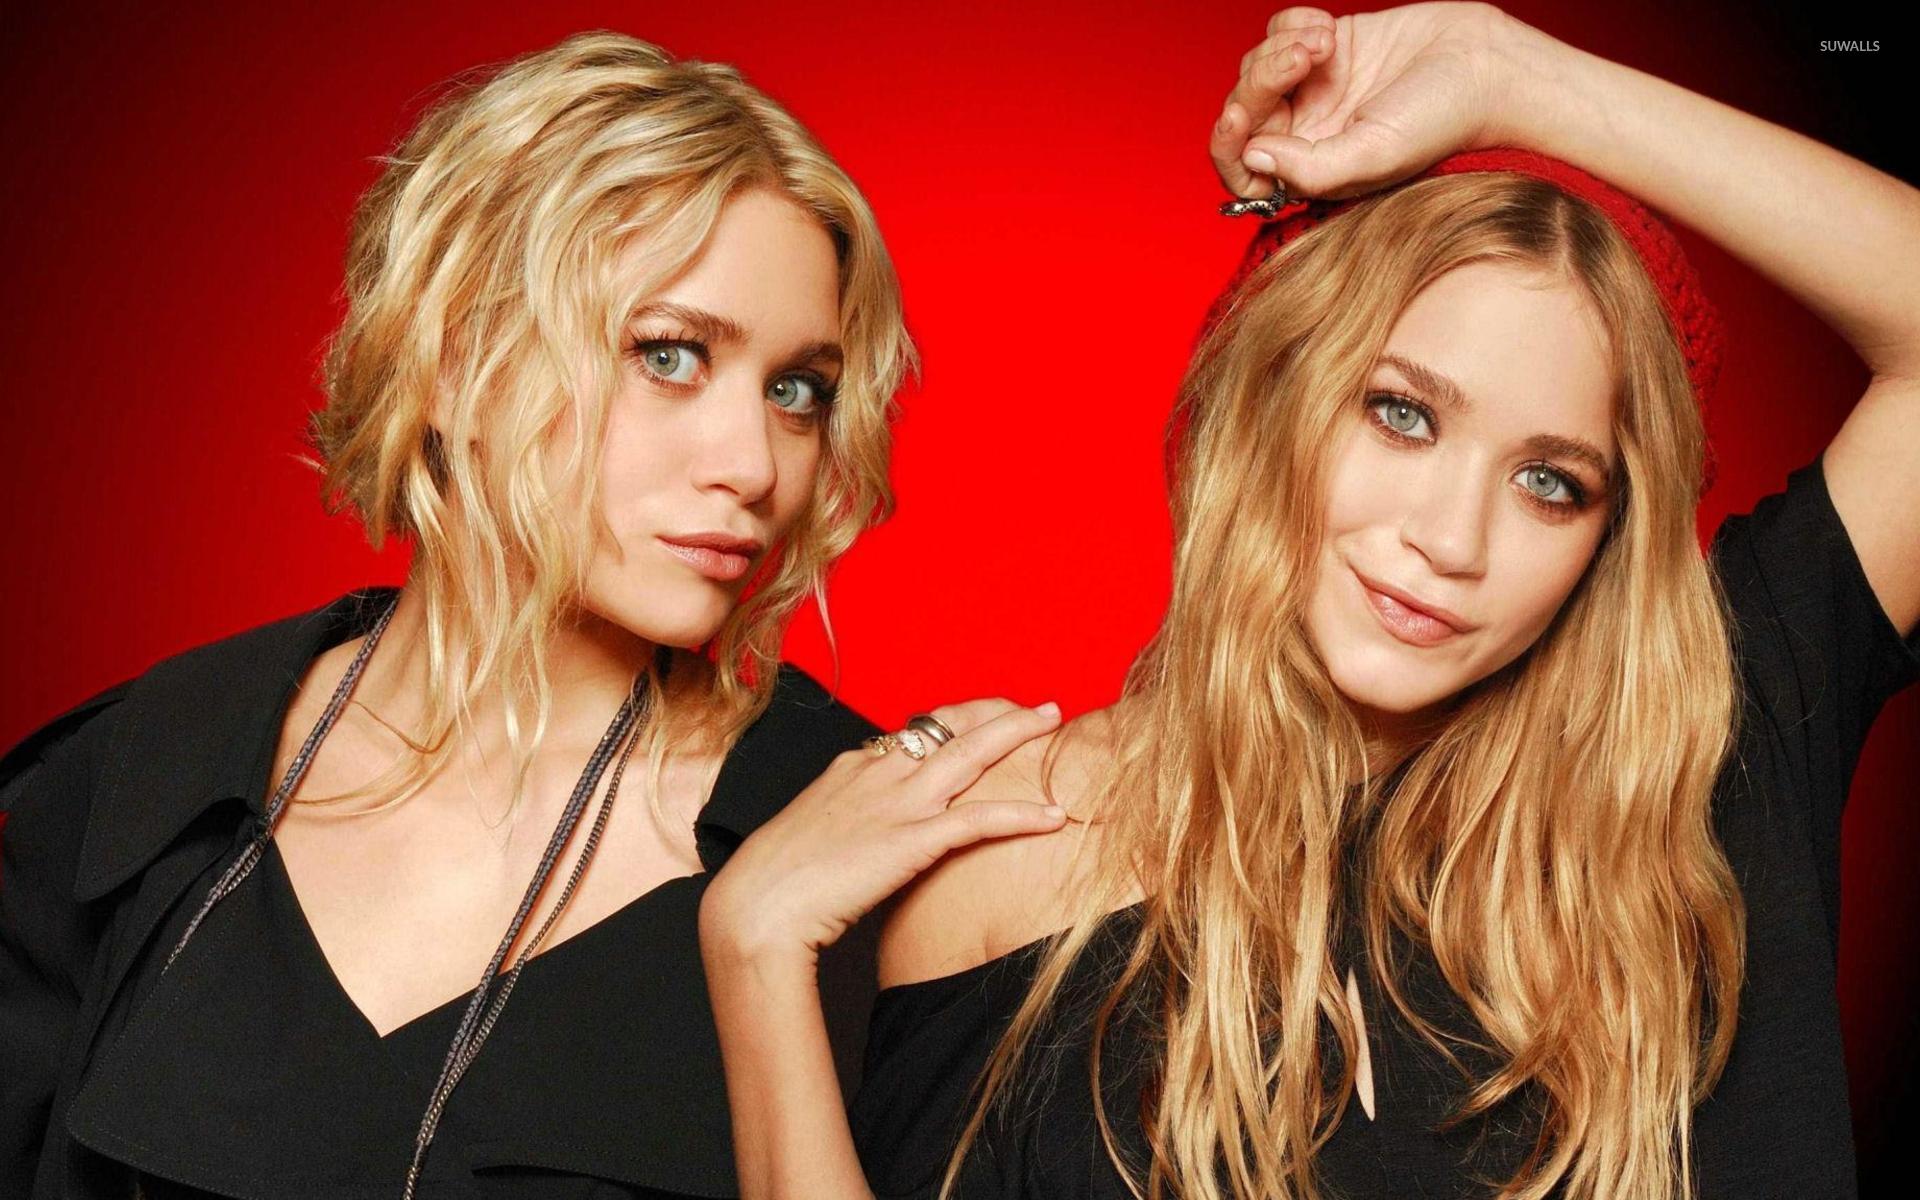 Top 10 Photos HQ  # 20 Mary-Kate & Ashley Olsen 4x6 Photo Set 